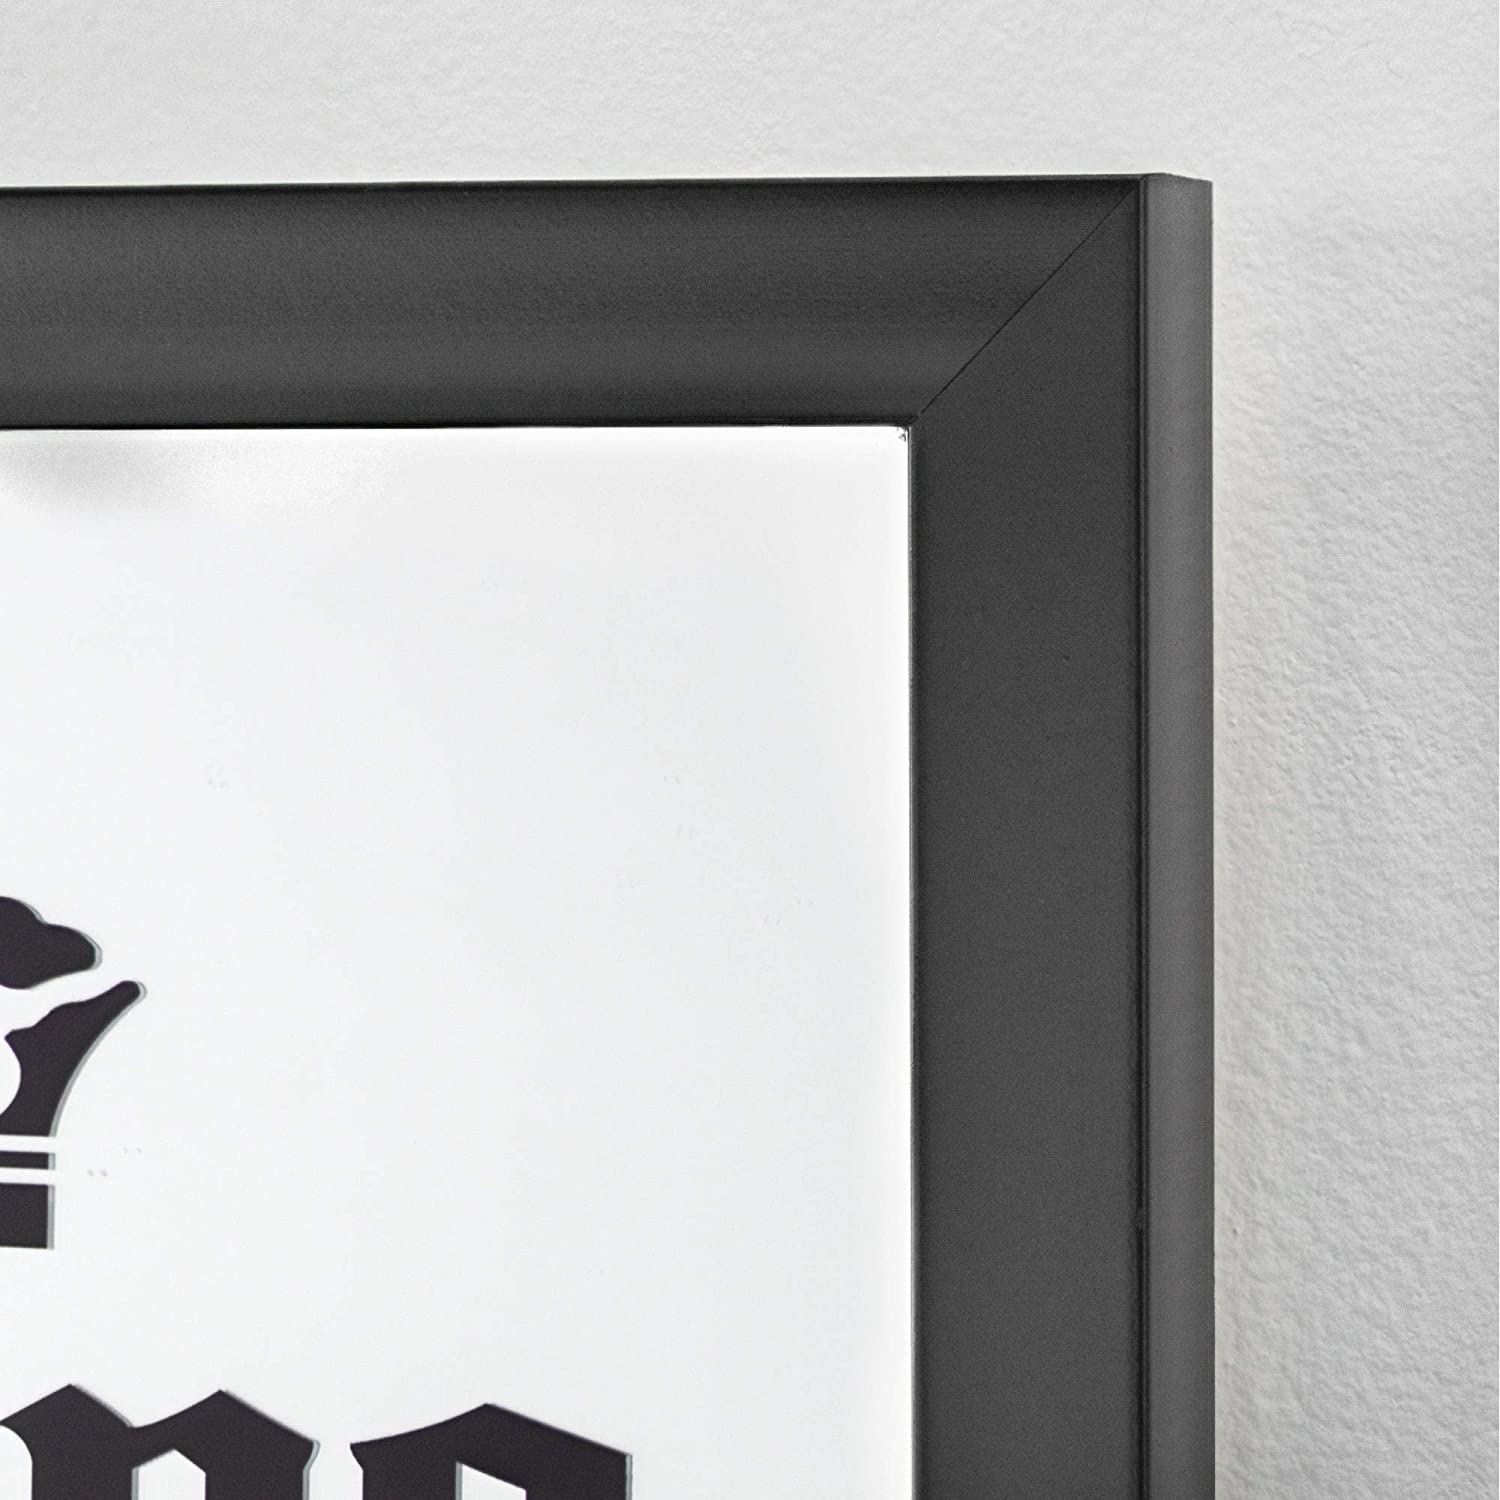 Extra Screen Printed Mirror Black White Novelty Plastic